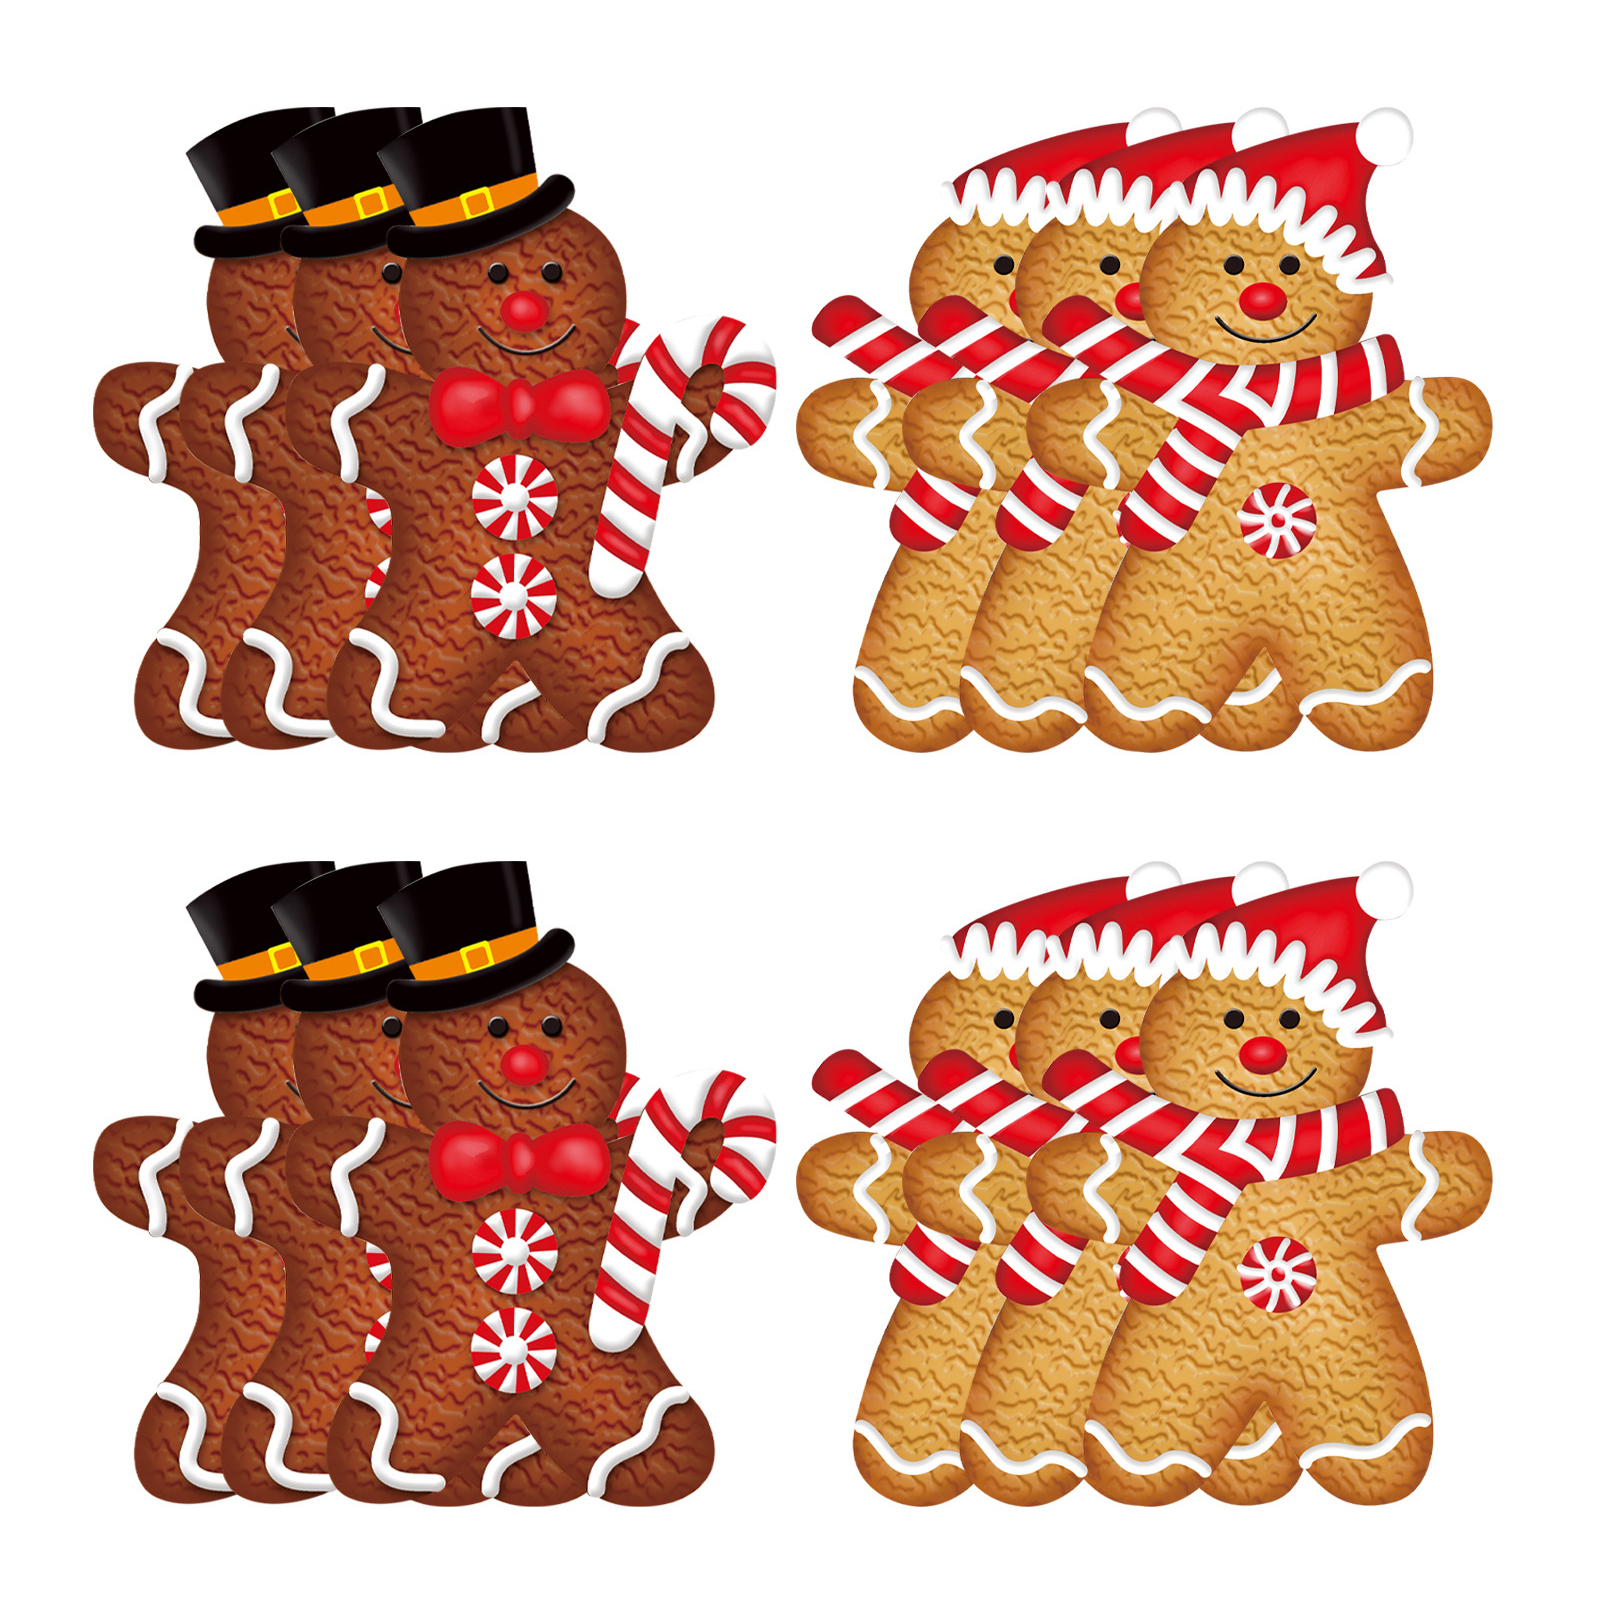 microgood 12Pcs Christmas Cookie Man Decoration Reusable Holiday Decor